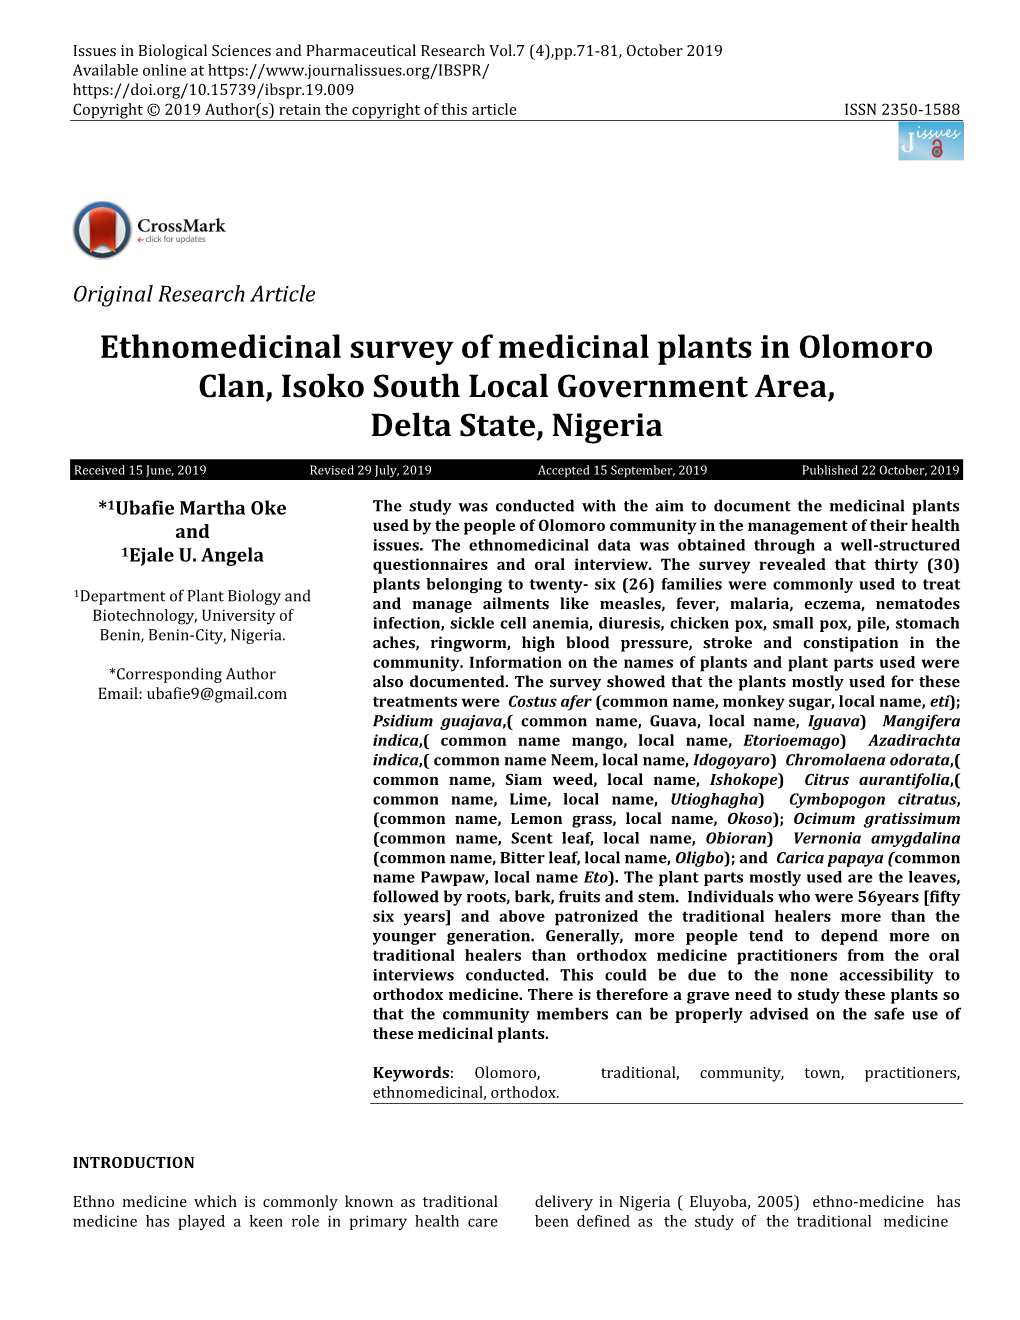 Ethnomedicinal Survey of Medicinal Plants in Olomoro Clan, Isoko South Local Government Area, Delta State, Nigeria